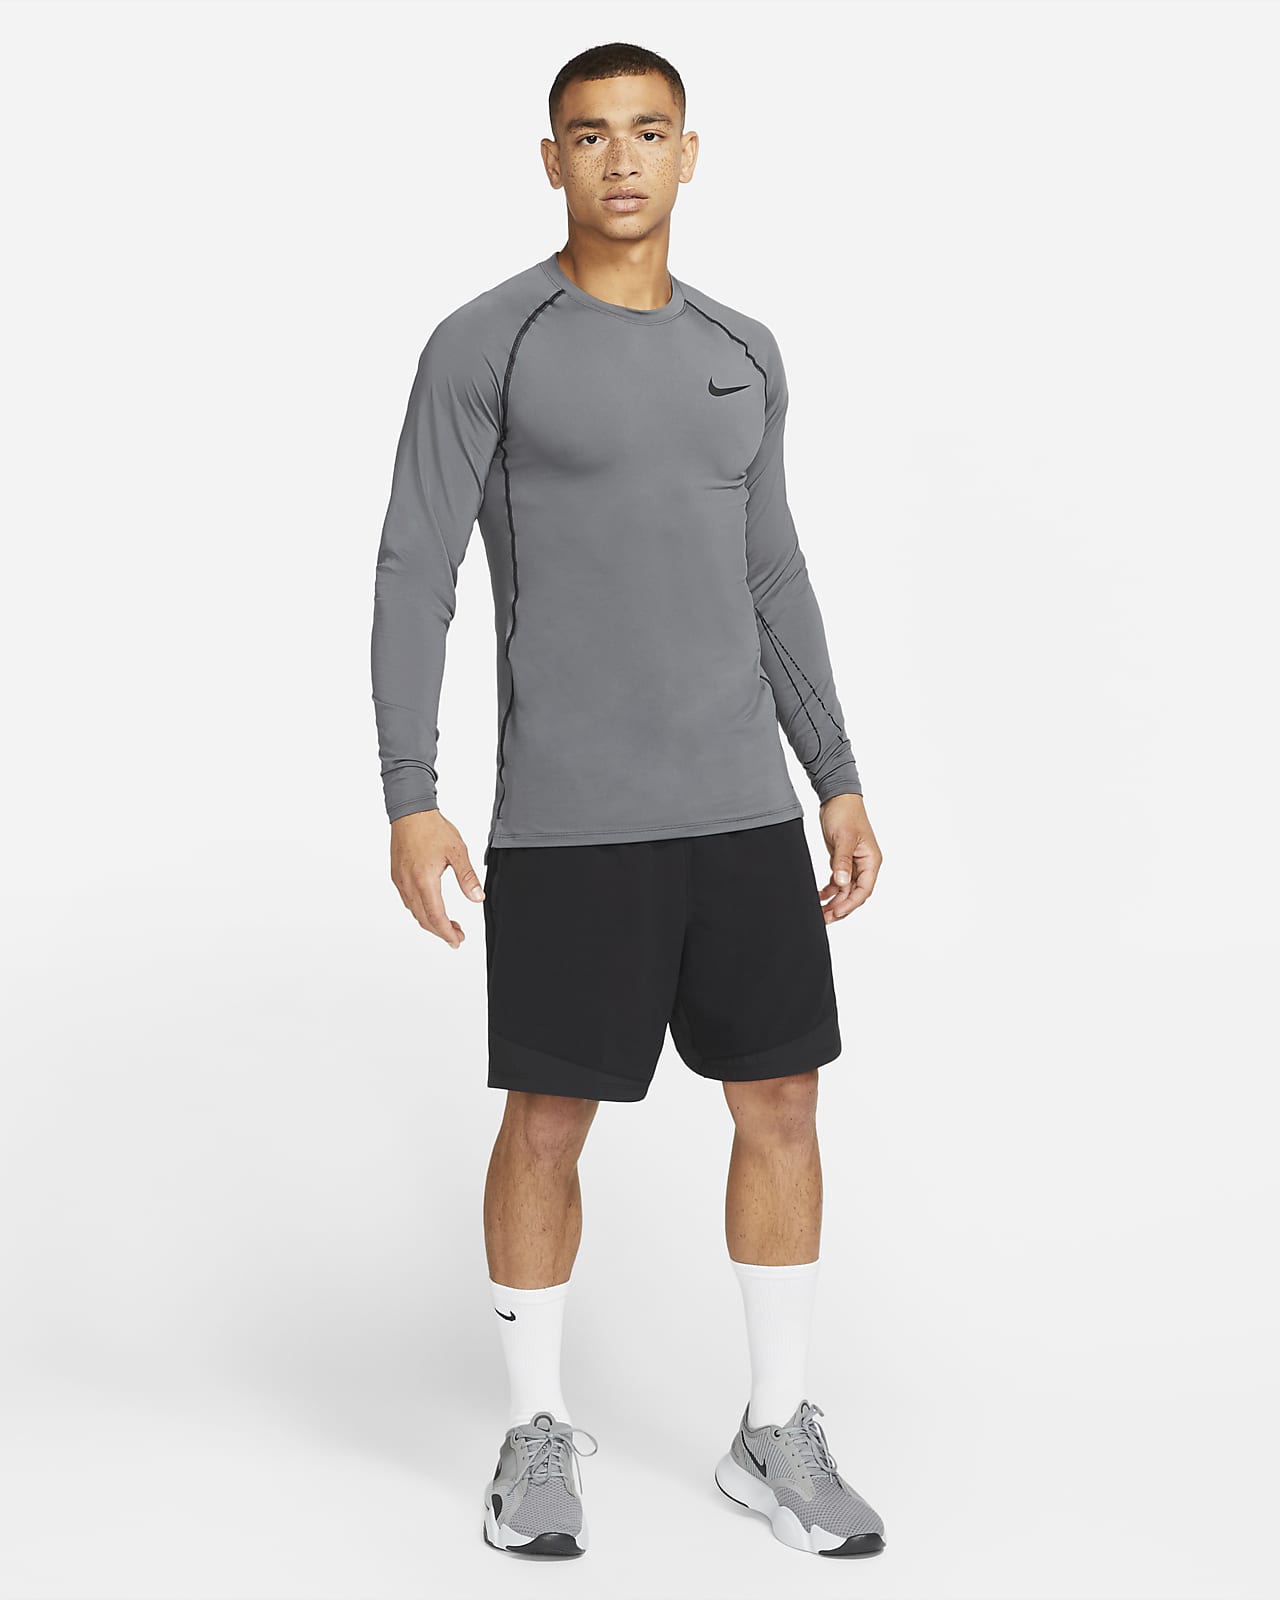 Nike Dri-FIT Legend Men's Long-Sleeve Fitness Top